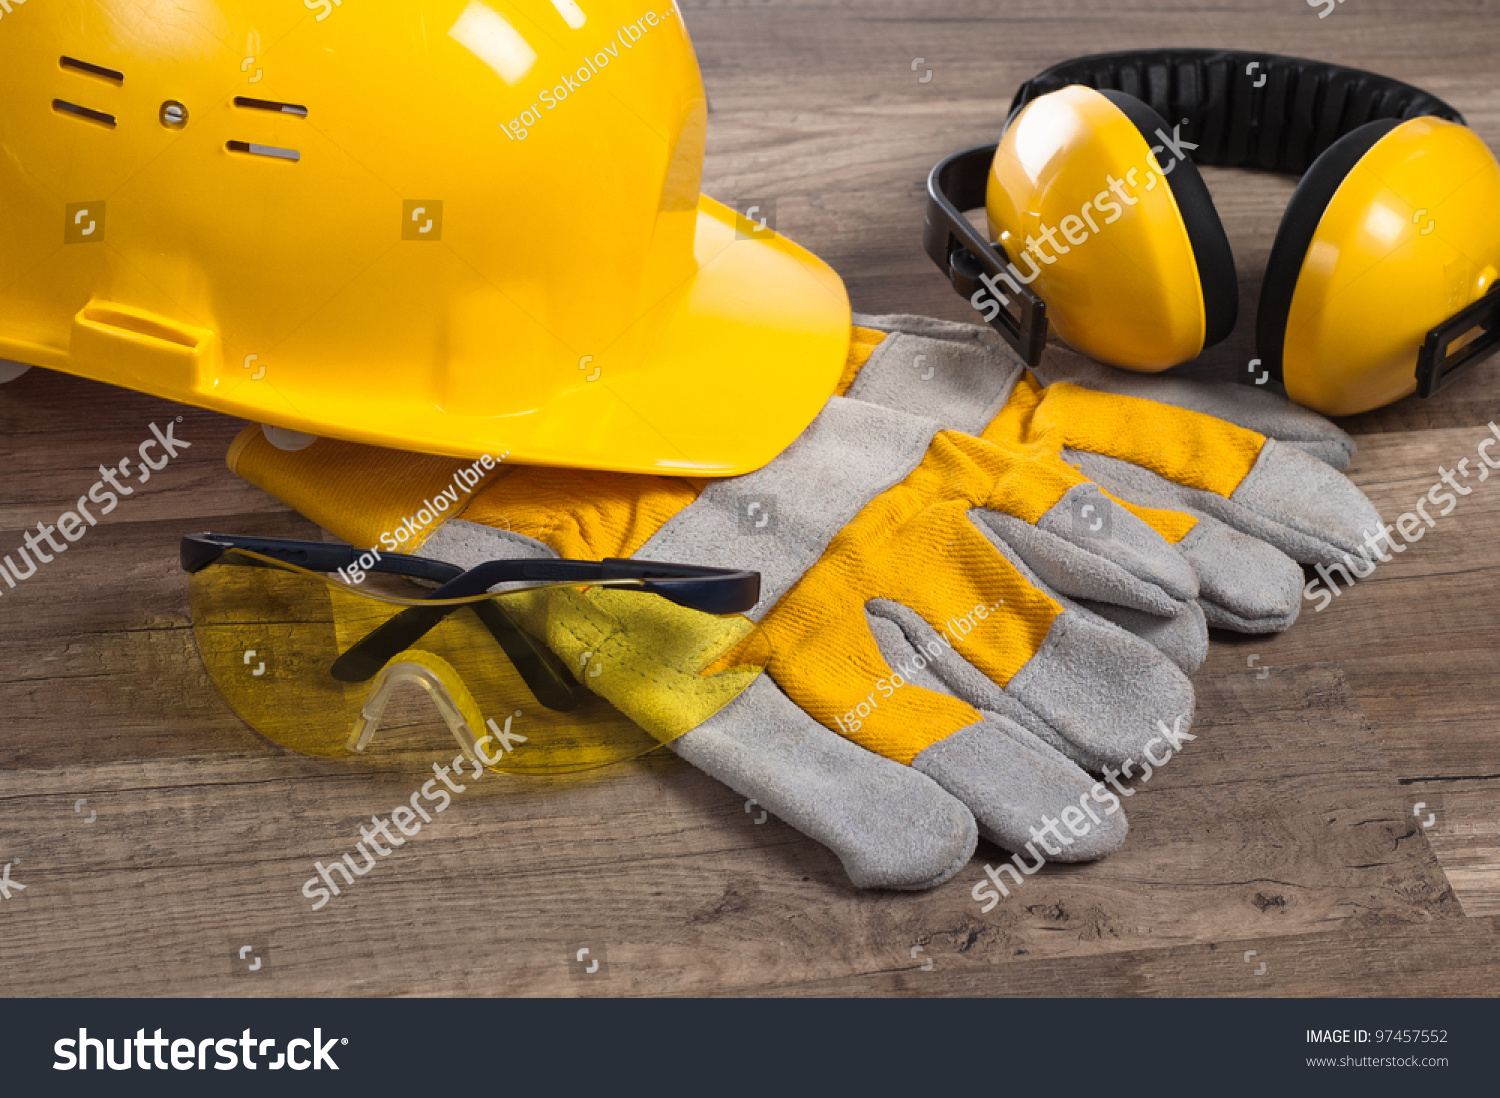 Construction safety dissertation